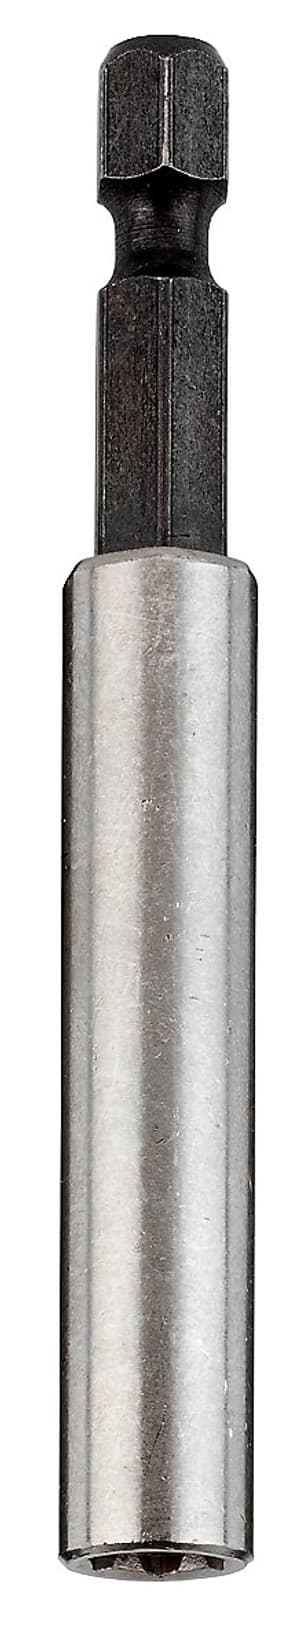 Inox Portabit bussola in acciaio 1/4" 75 mm